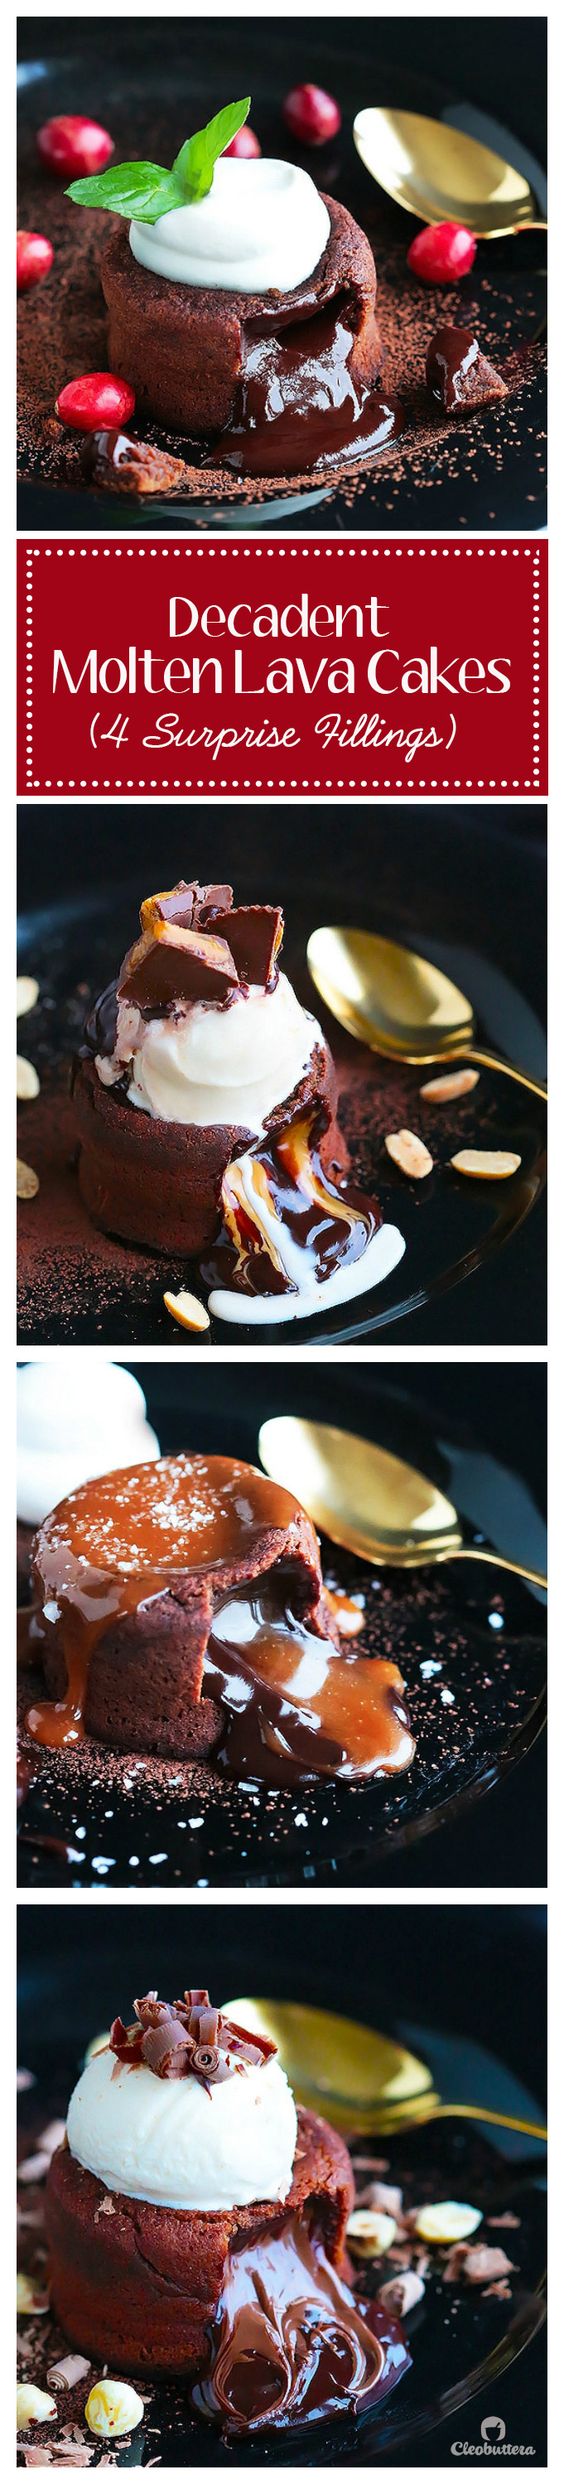 decadent_molten_lava_cakes